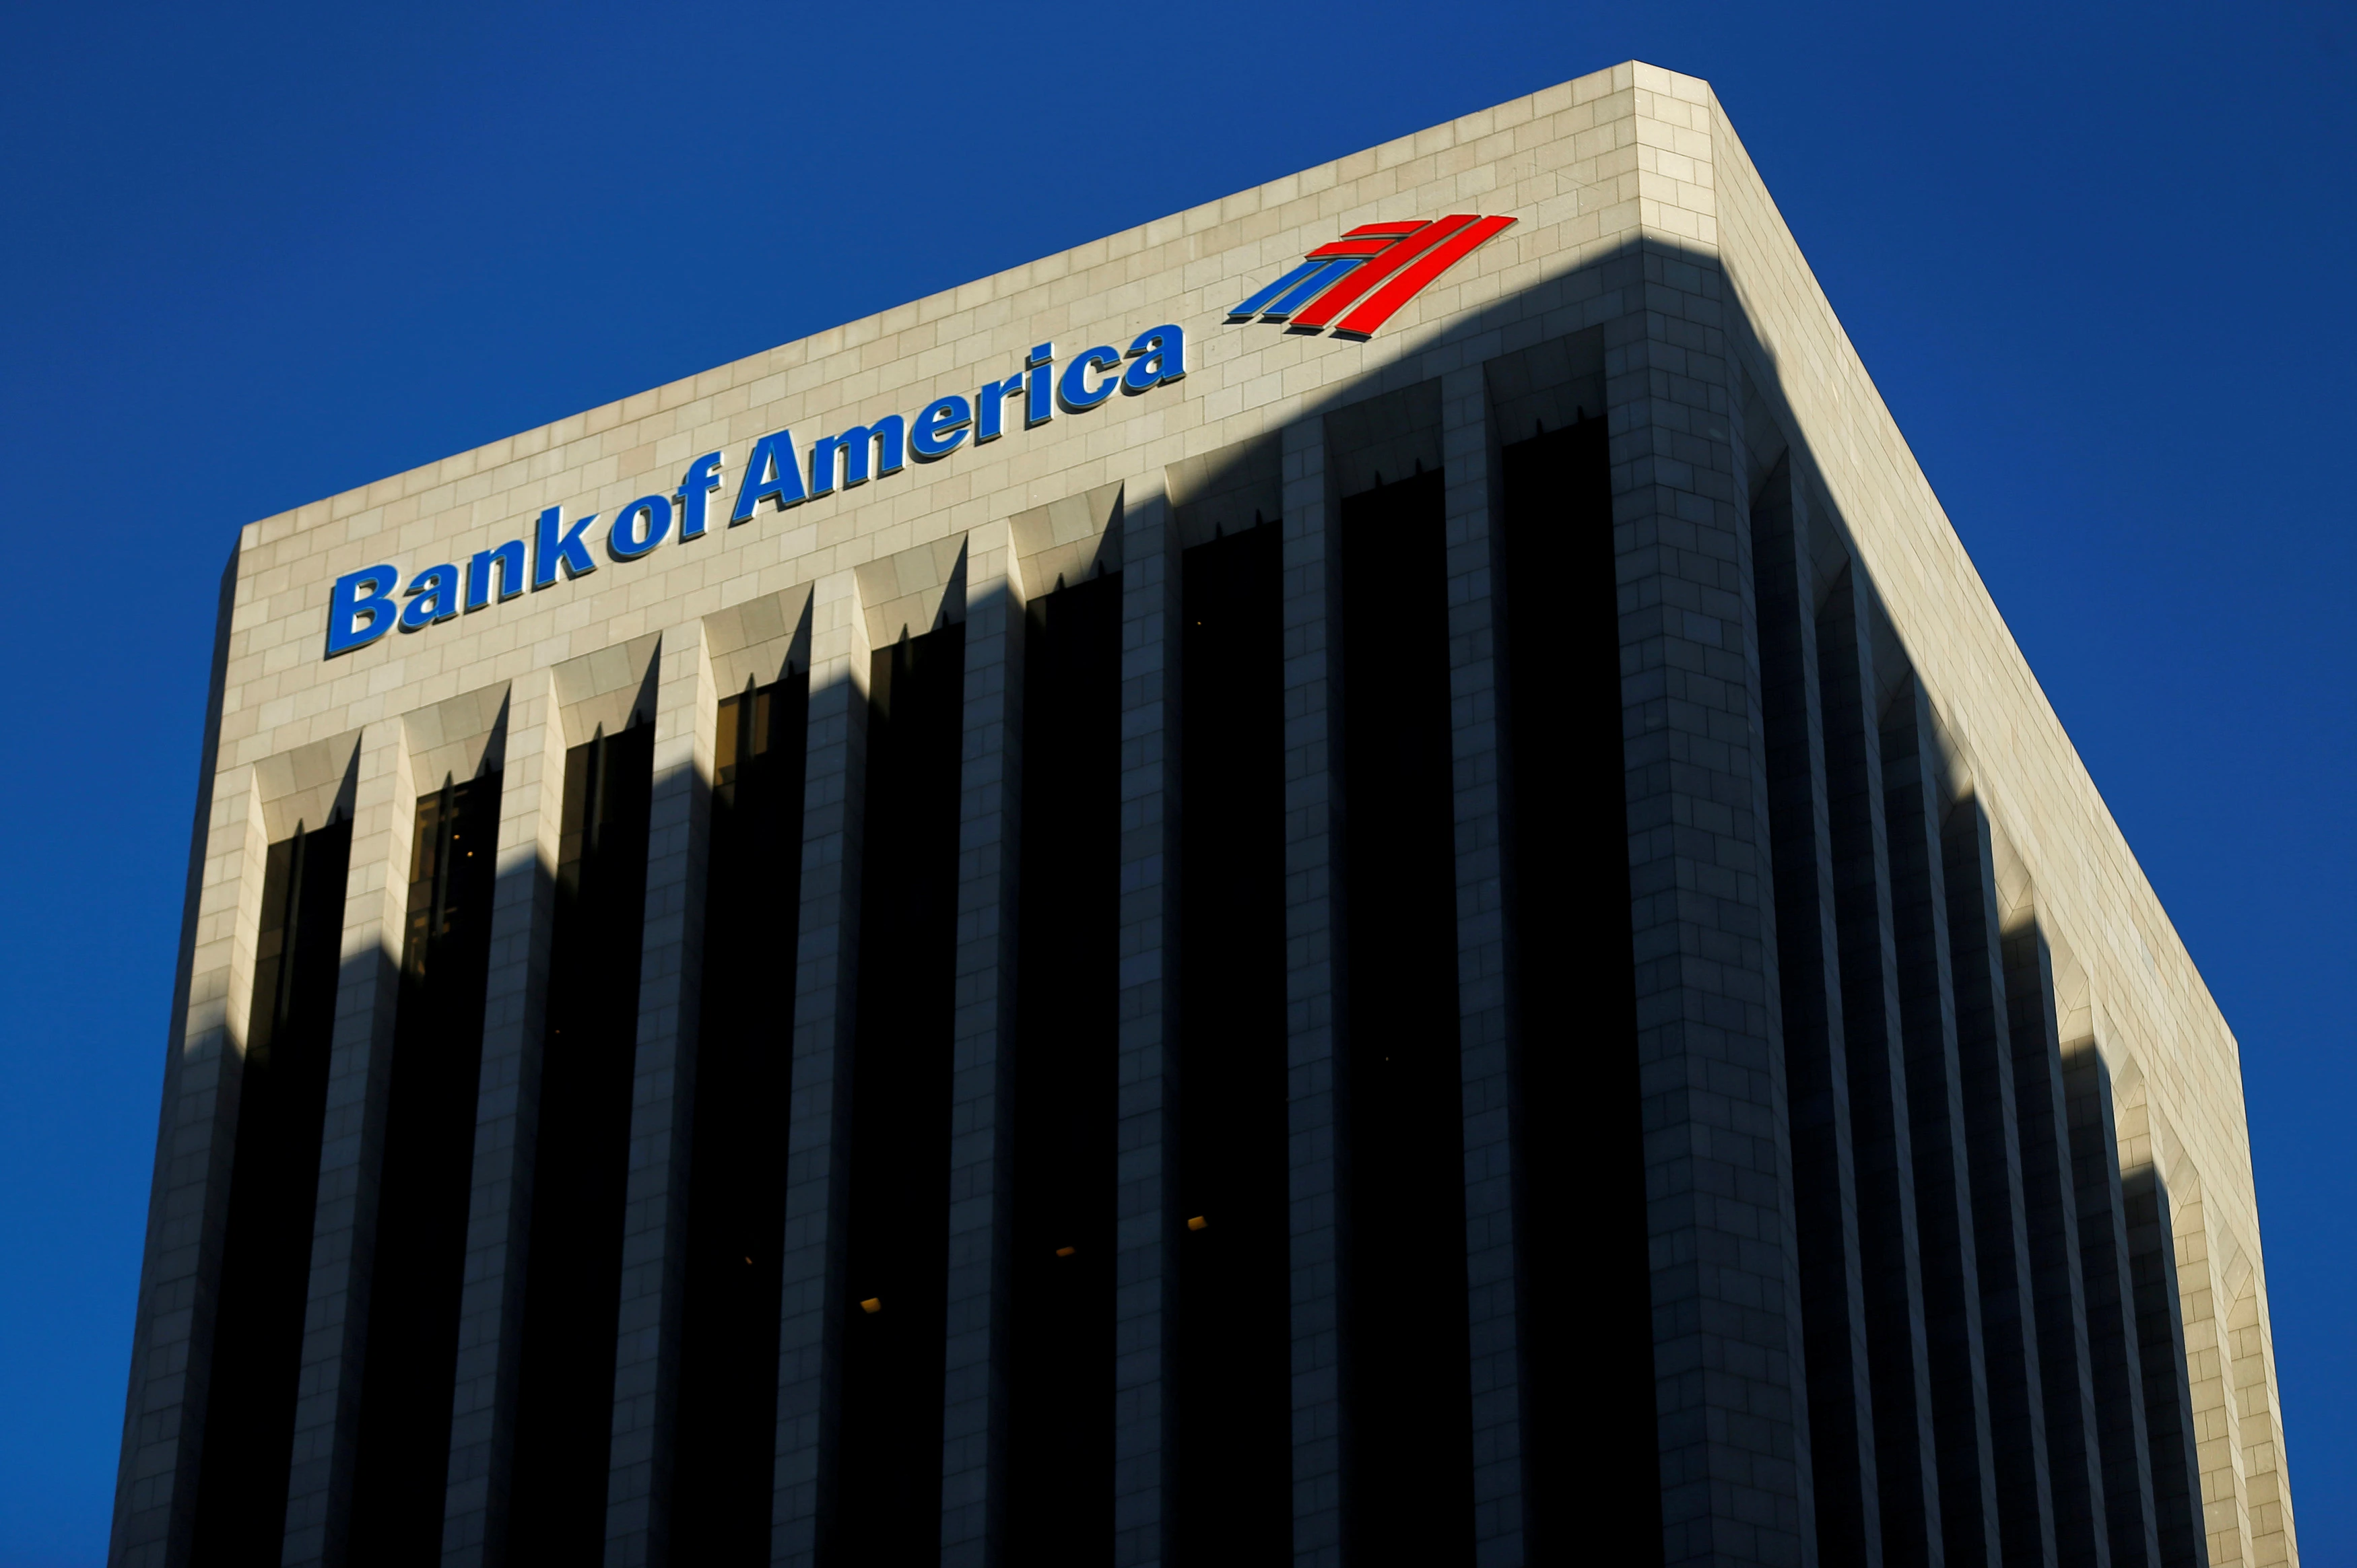 bank of america 1